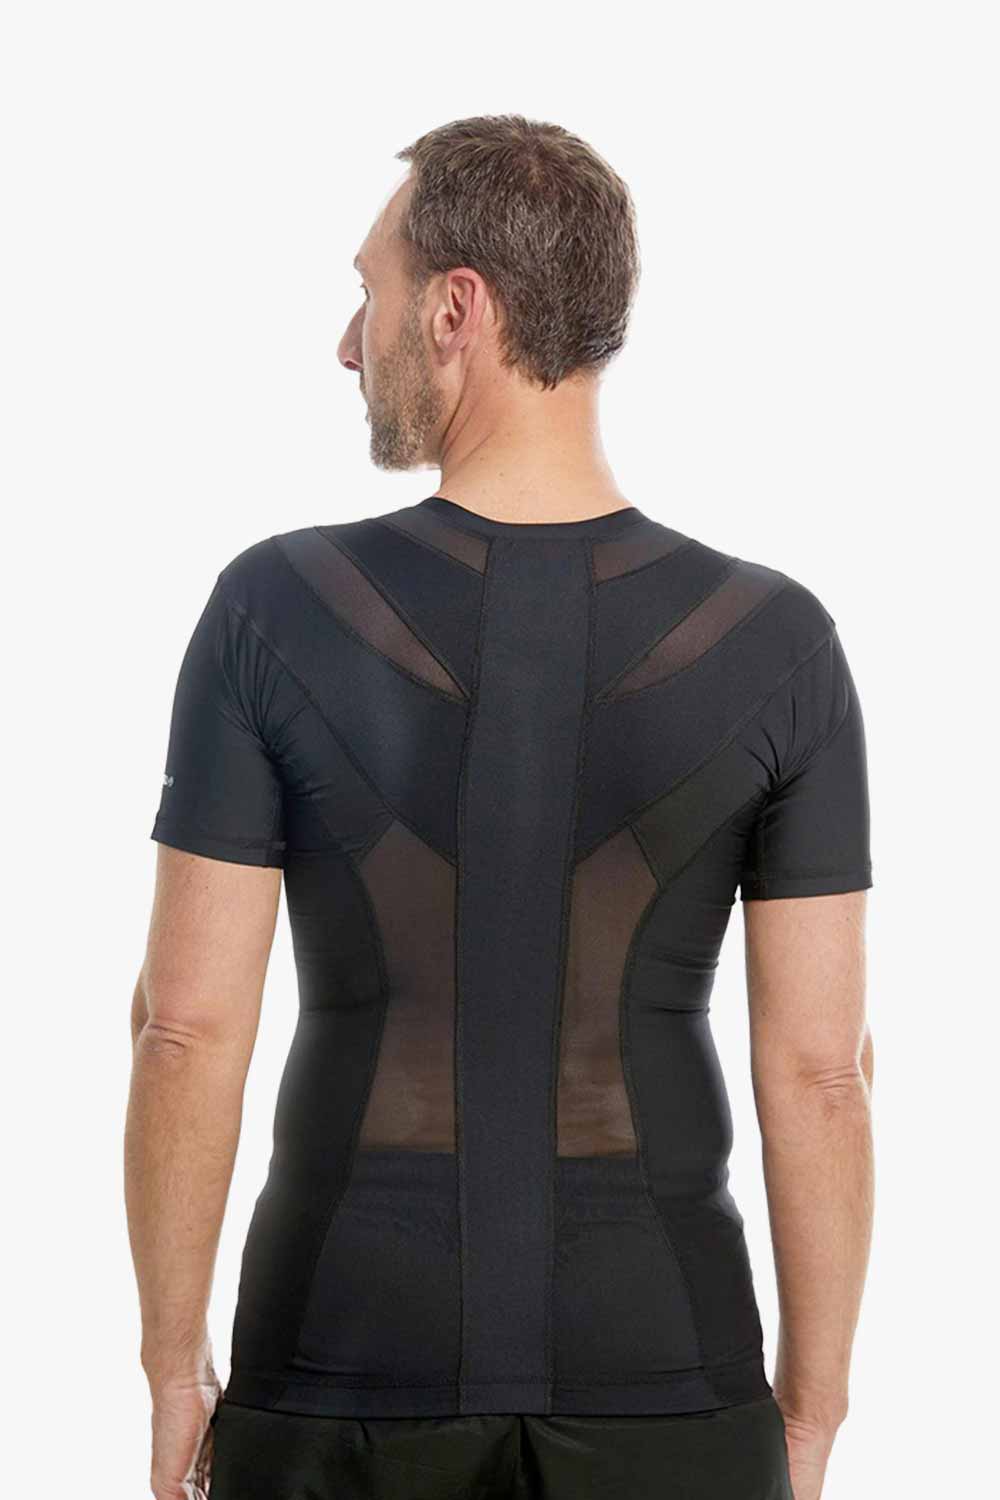 Posture Shirt™ for men